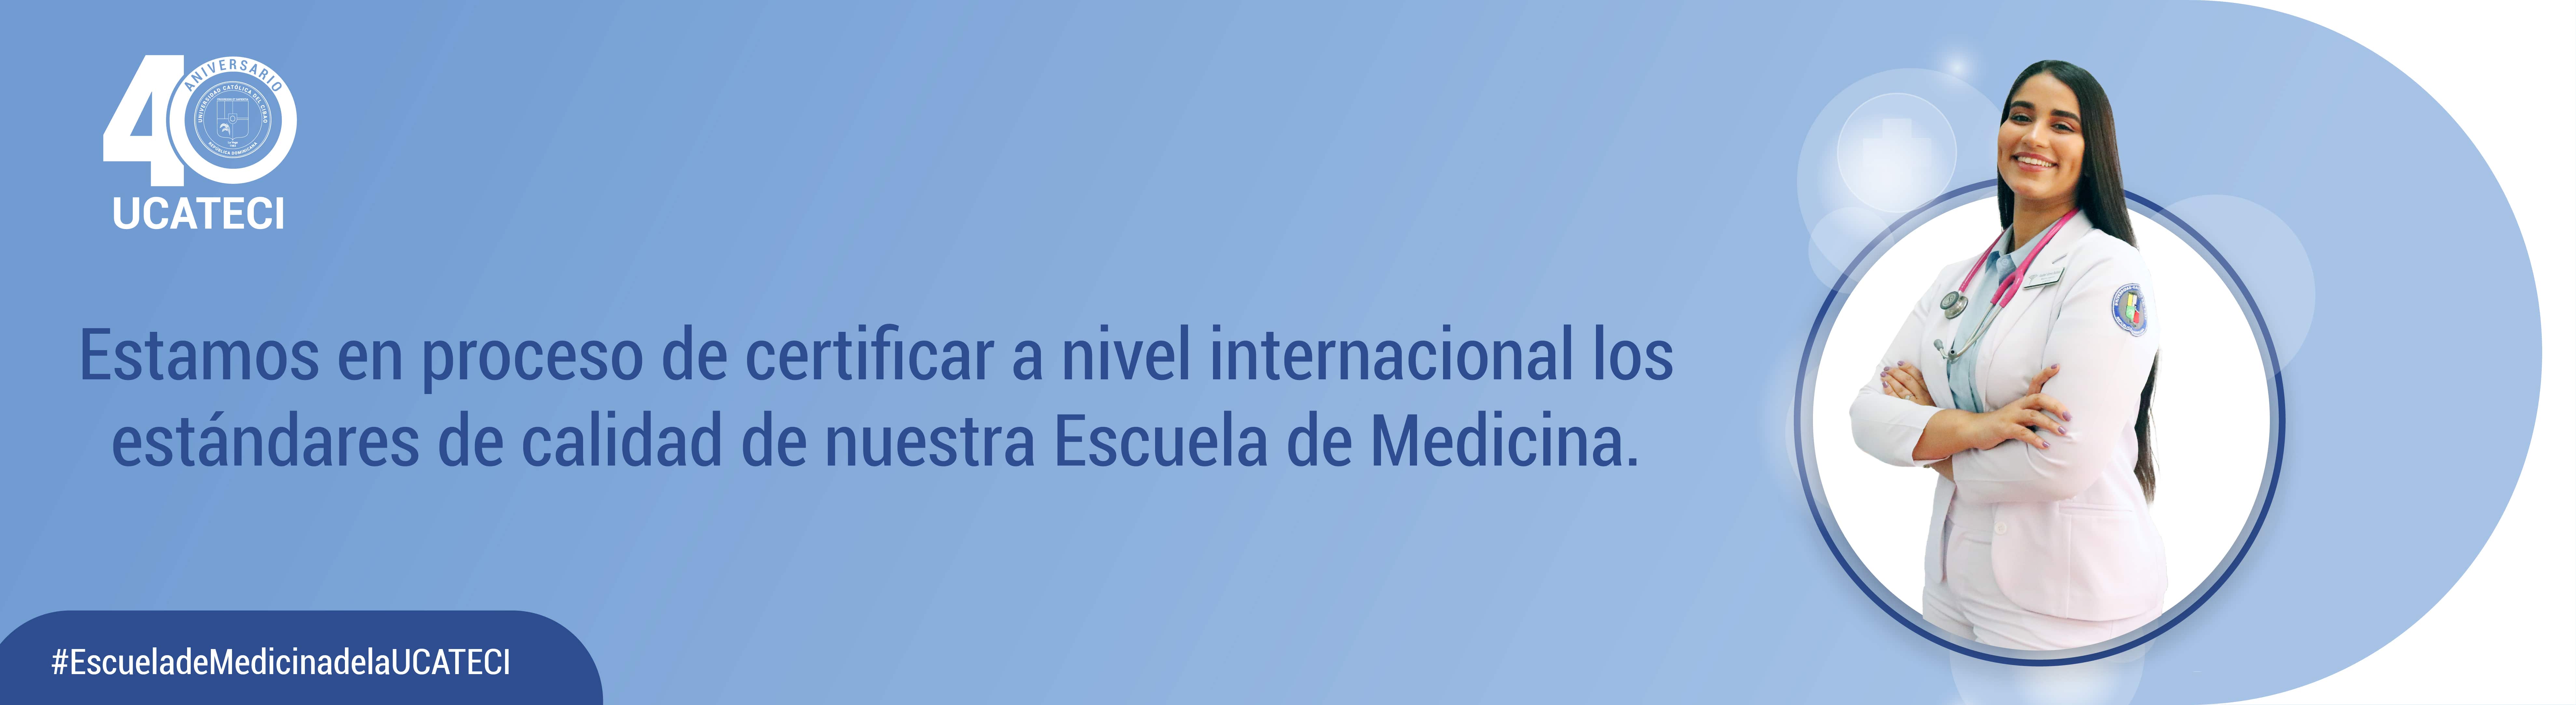 2Banner_Escuela_de_Medicina